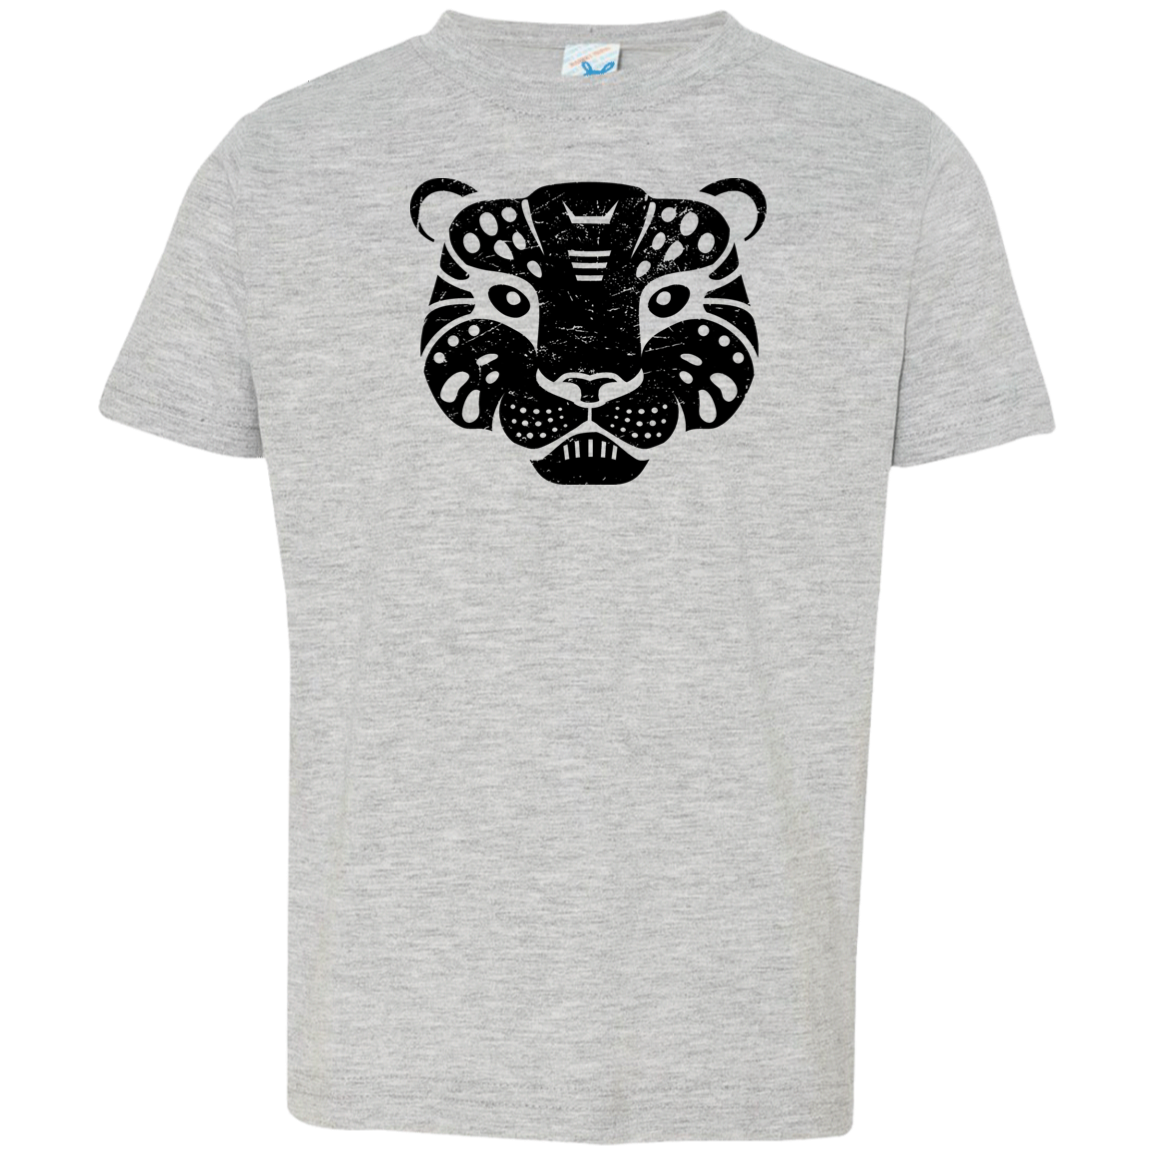 Black Distressed Emblem T-Shirt for Toddlers (Snow Leopard/Denali)